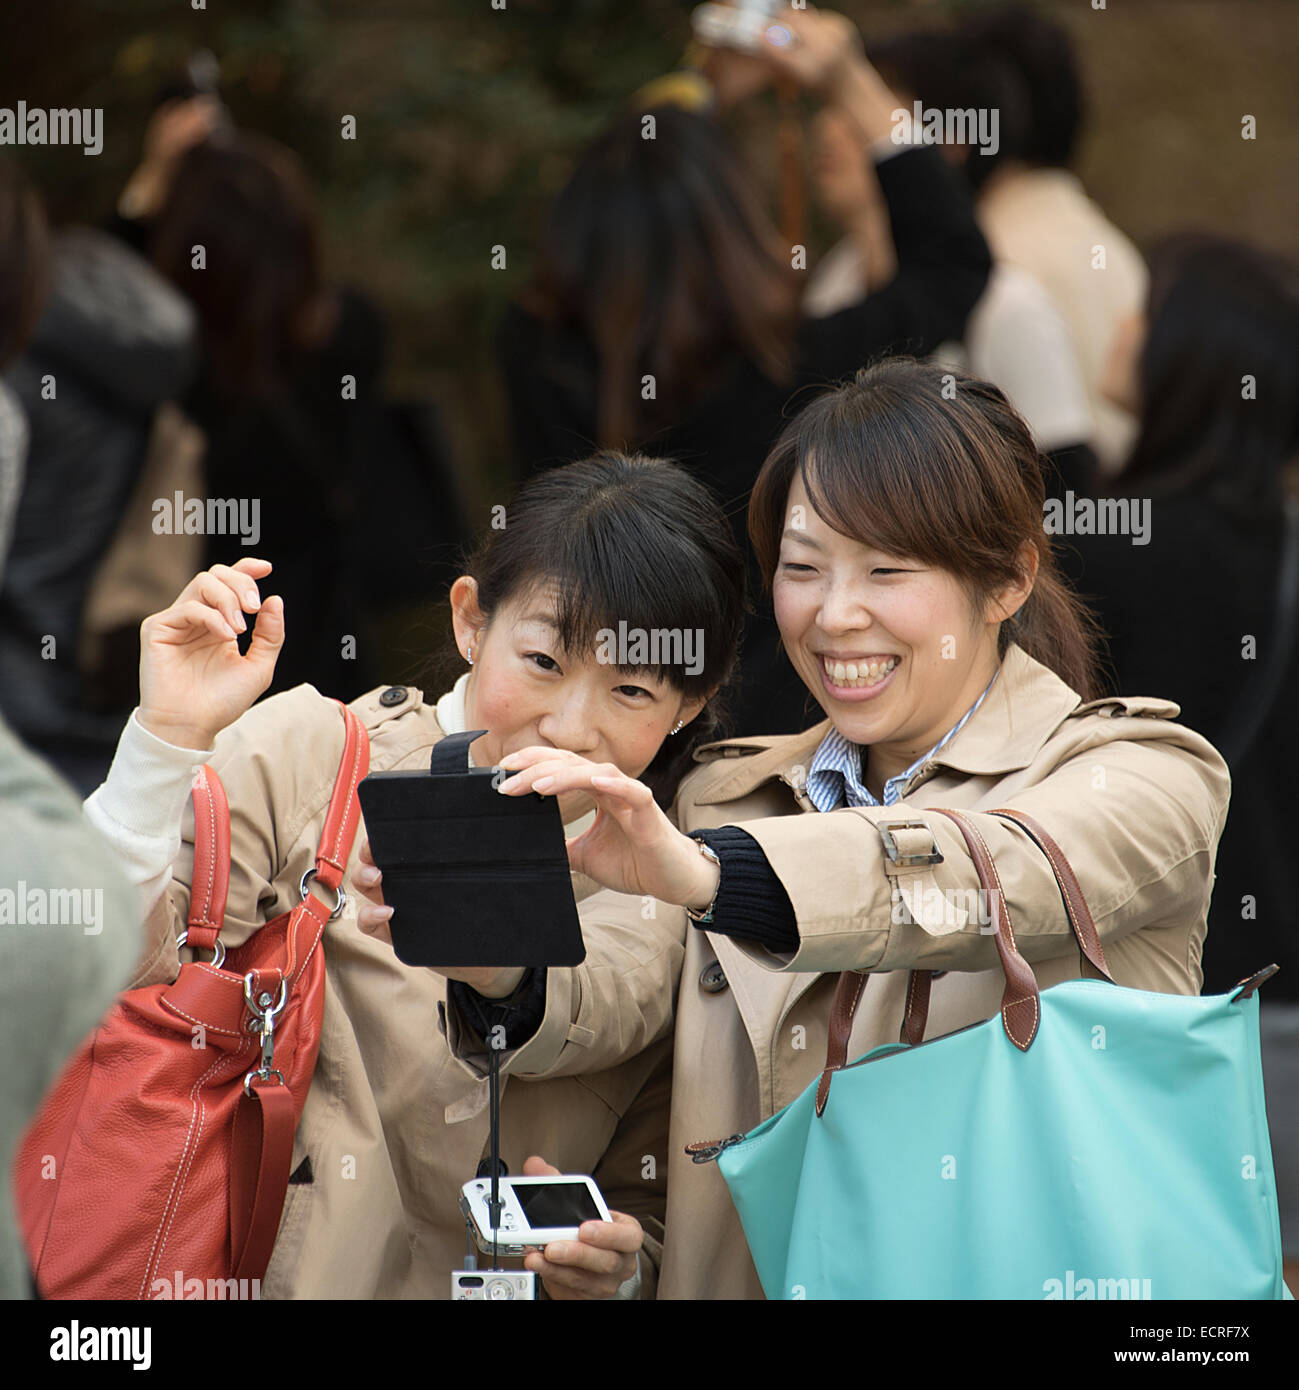 Japanese girls sharing a selfie, Kyoto, Japan. Stock Photo